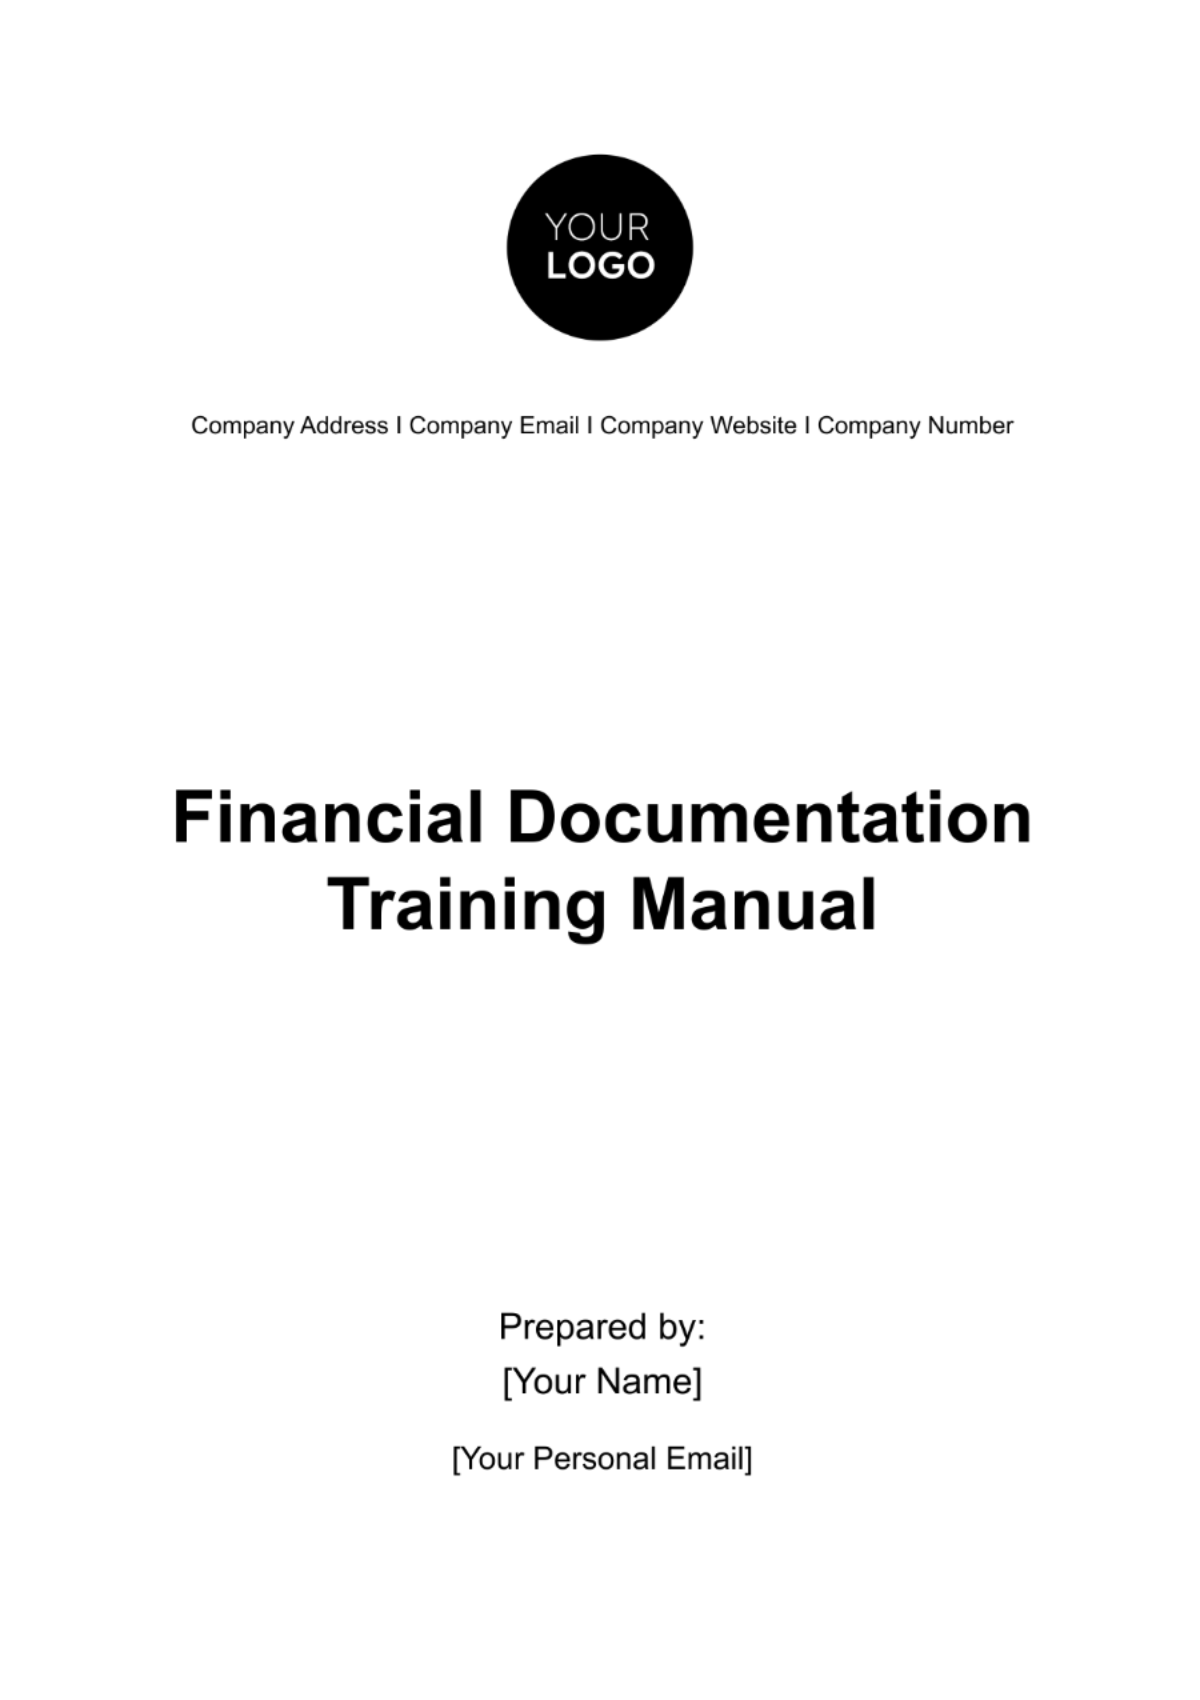 Financial Documentation Training Manual Template